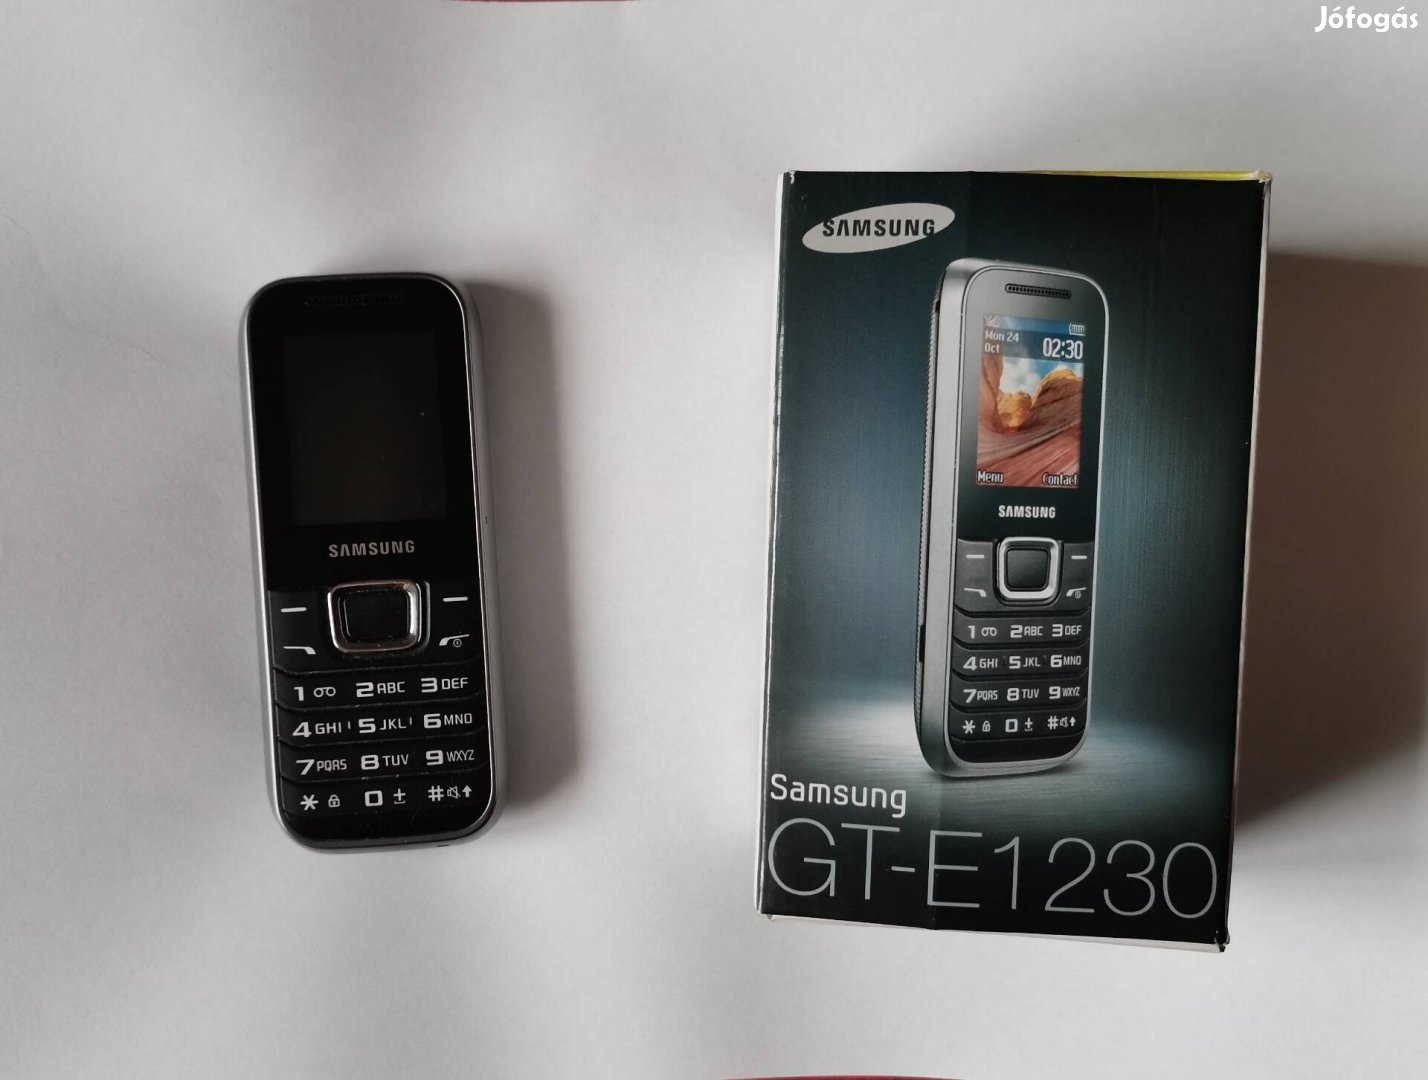 Samsung GT-E1230